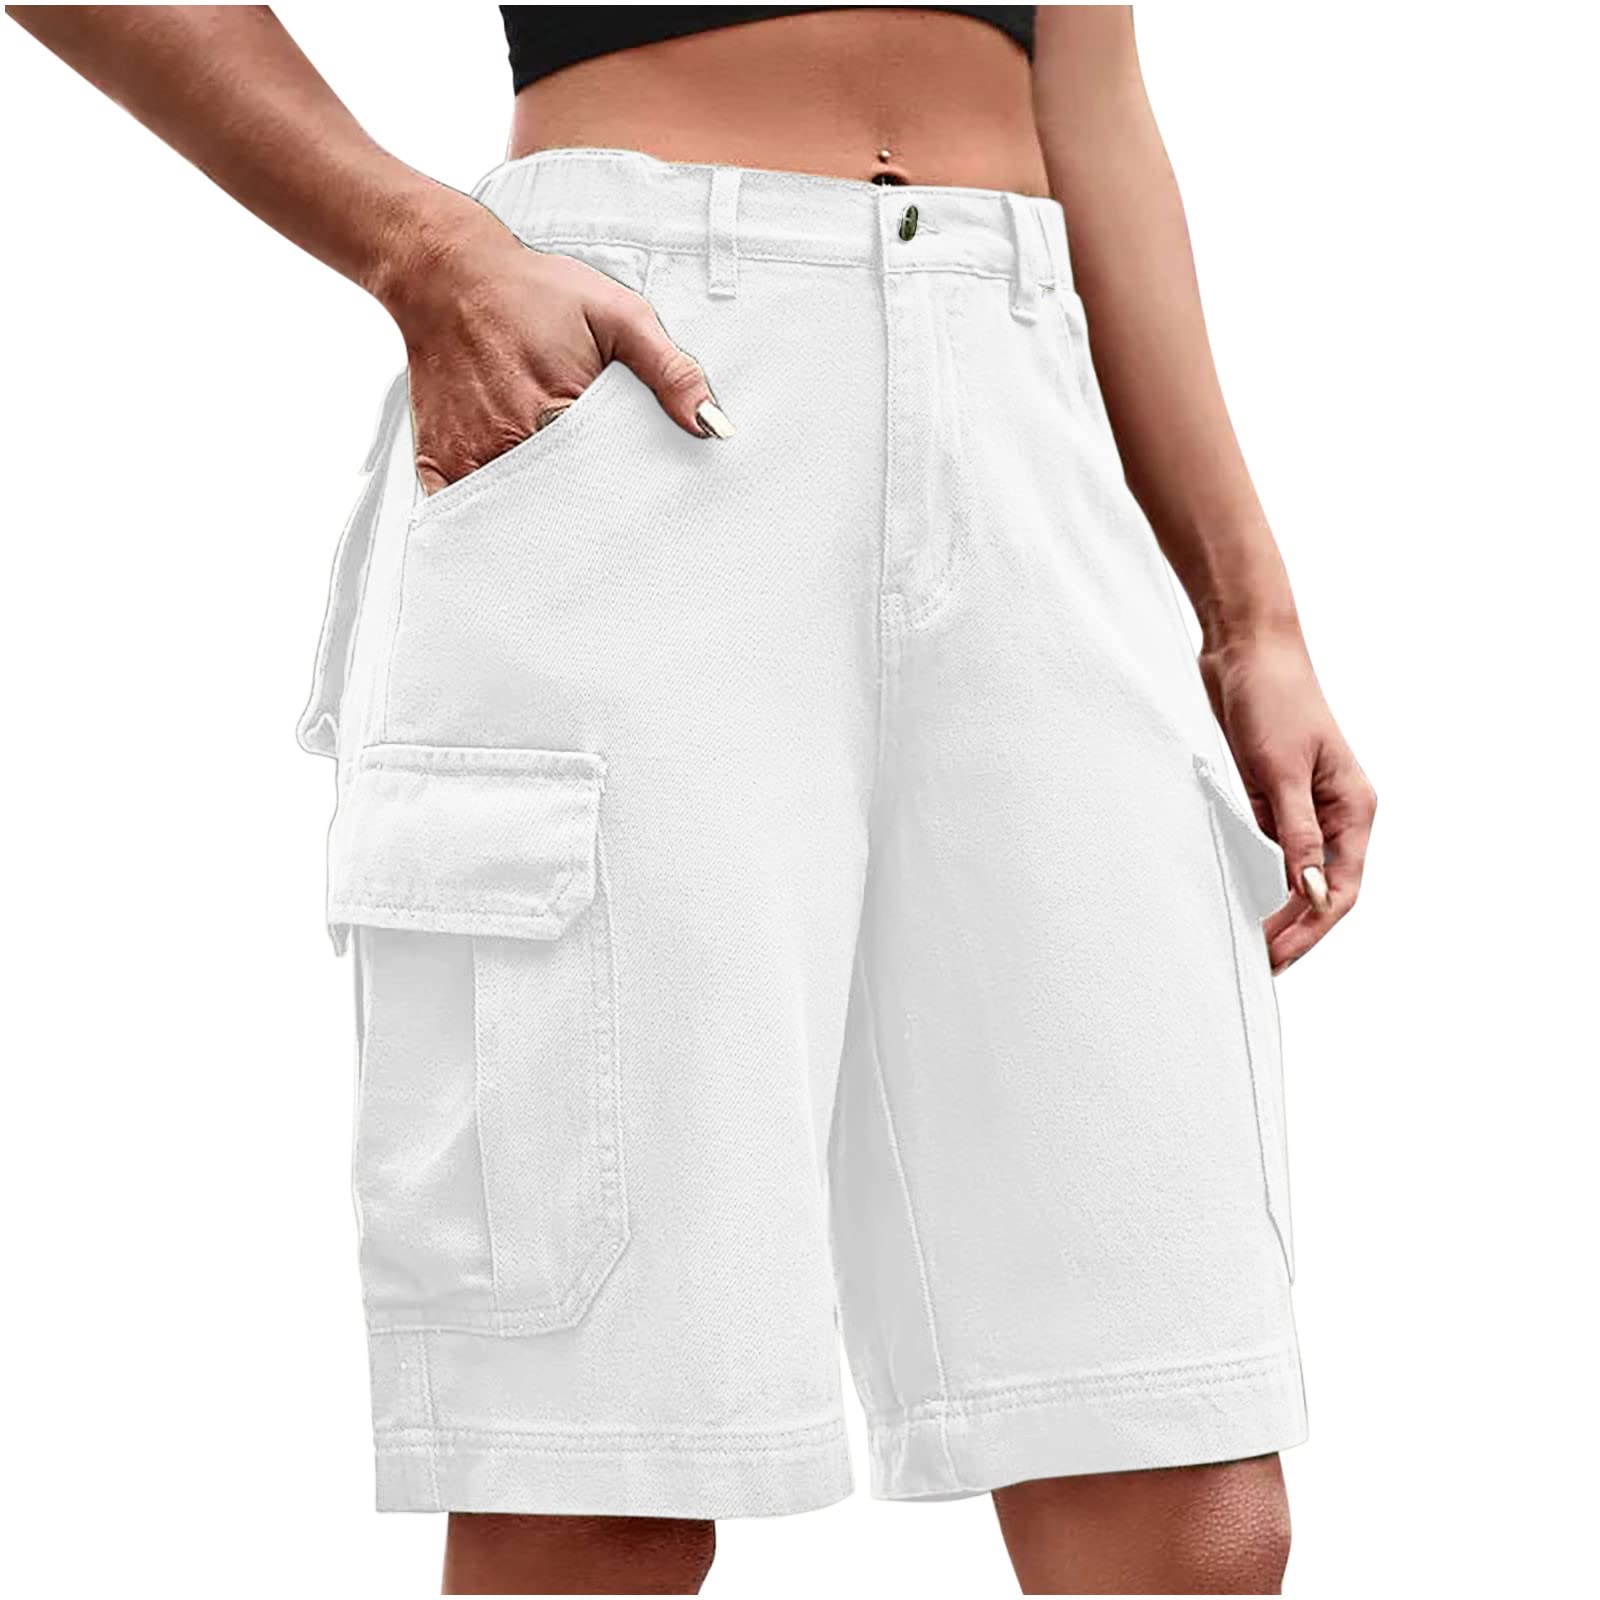 Women's Elastic Waist Shorts in White